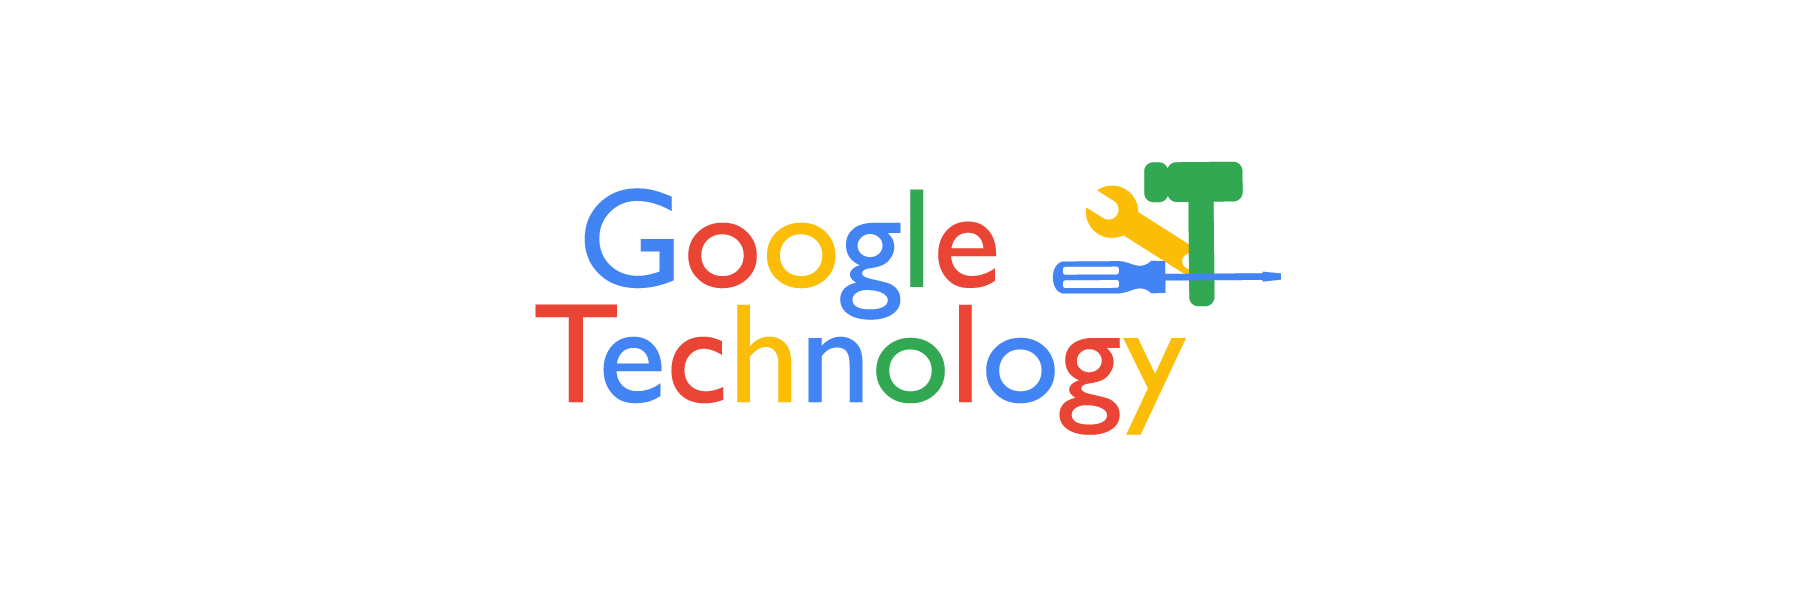 Google Technology Courses